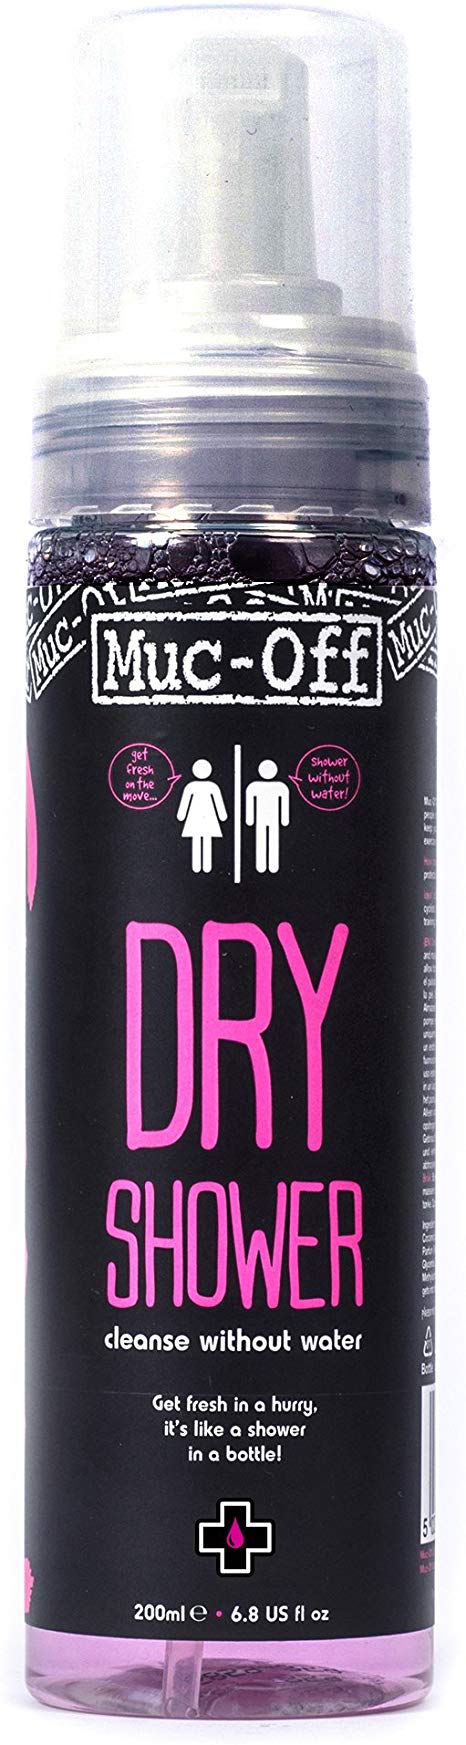 MucOff Dry Shower